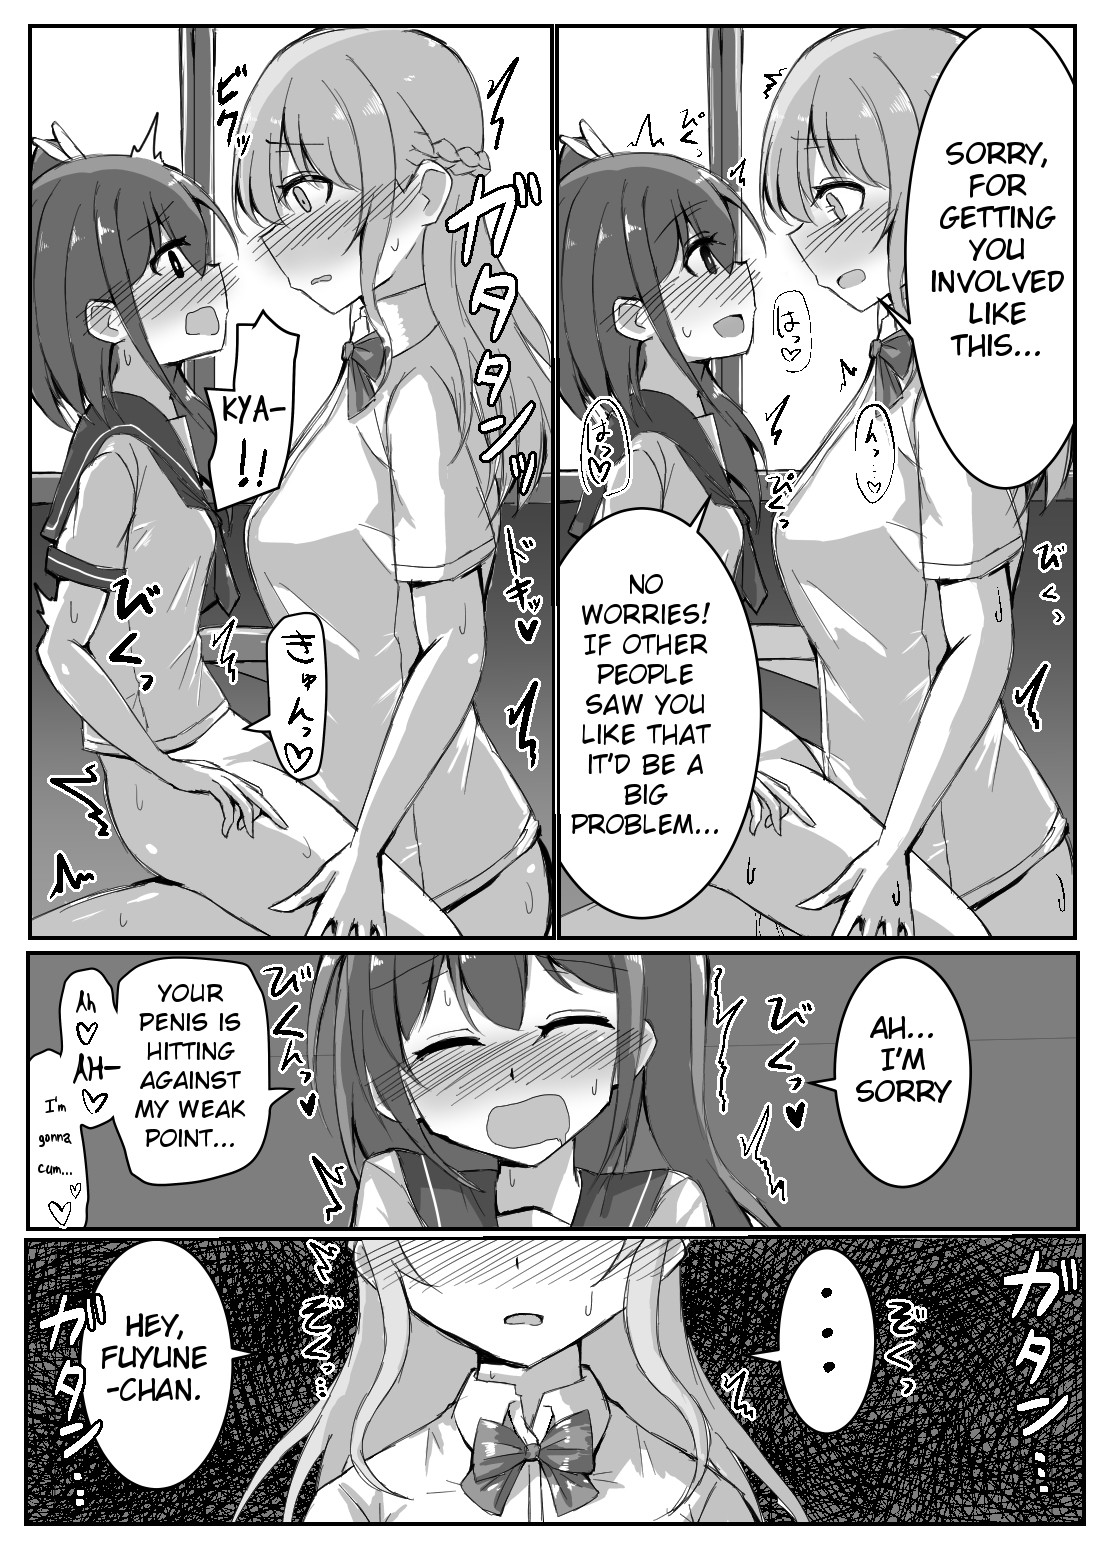 Futa on female hentai manga